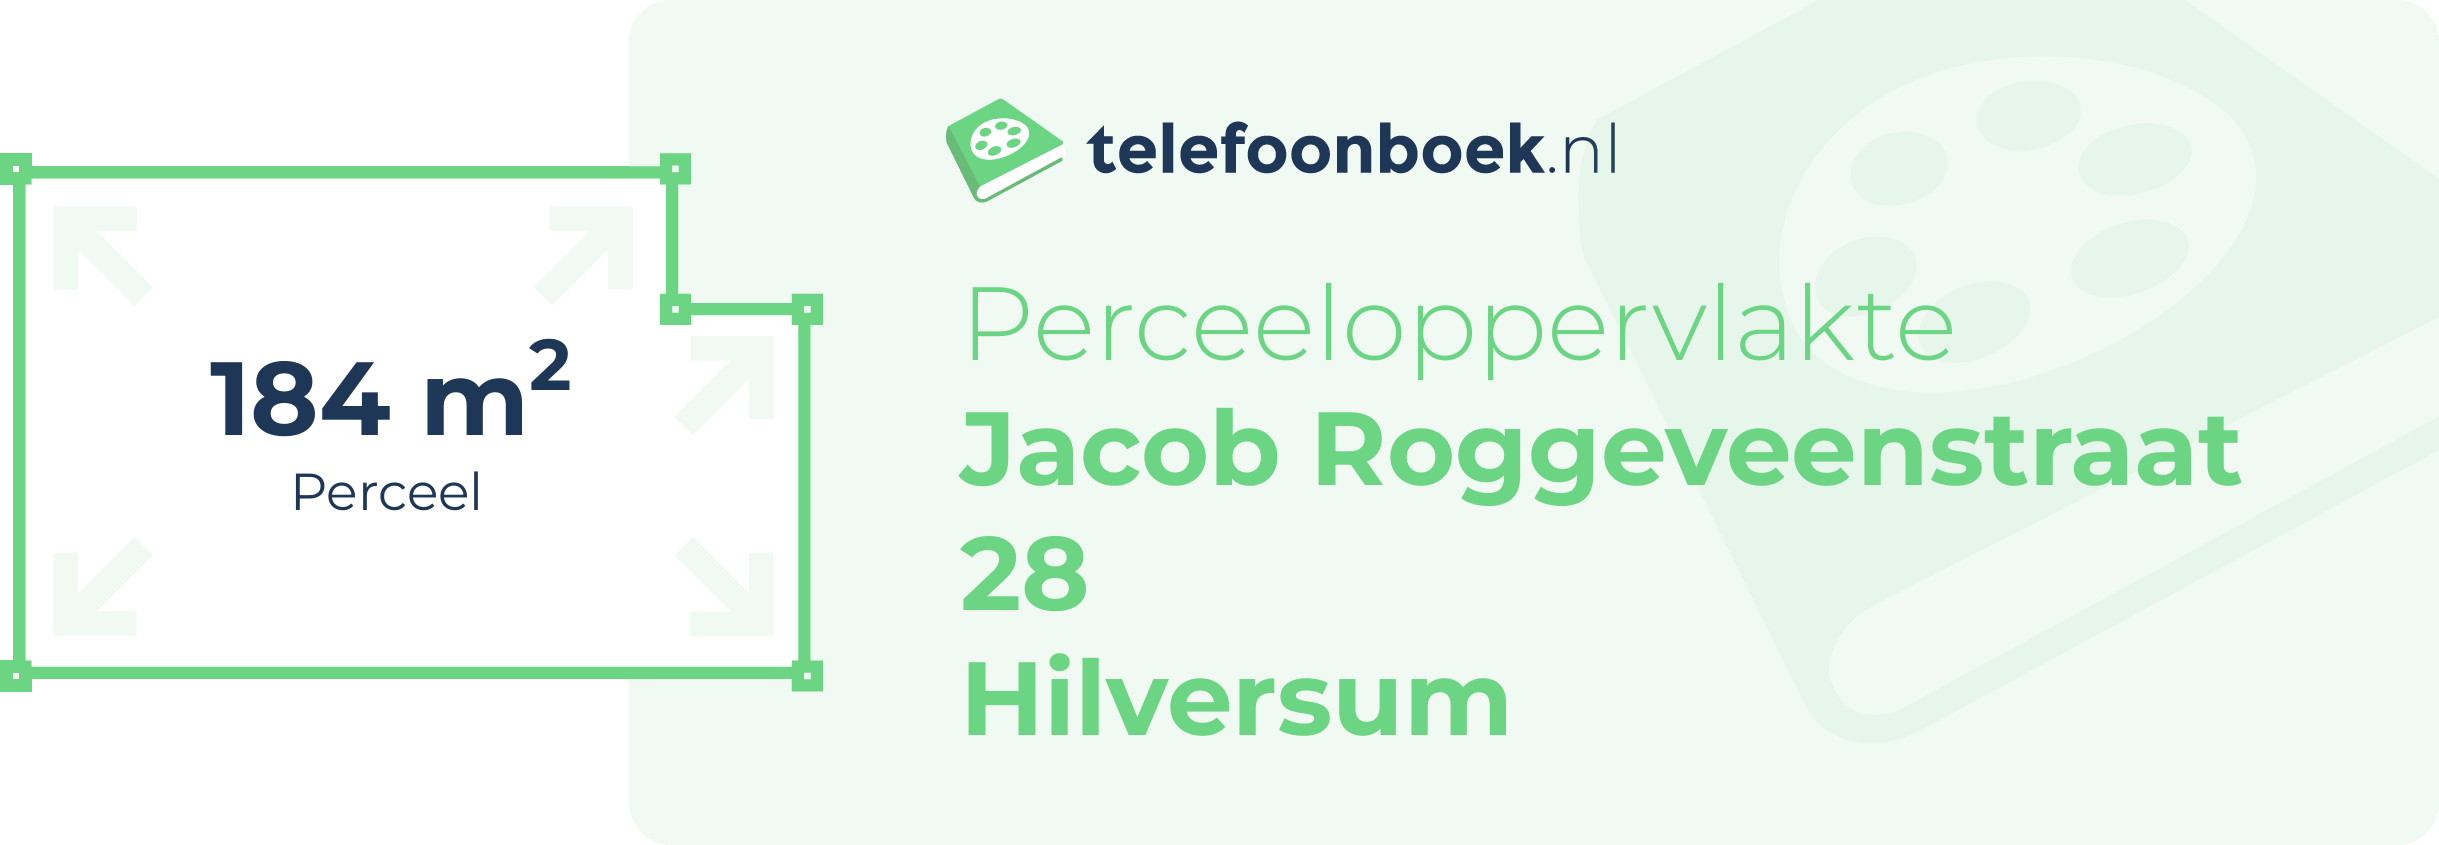 Perceeloppervlakte Jacob Roggeveenstraat 28 Hilversum